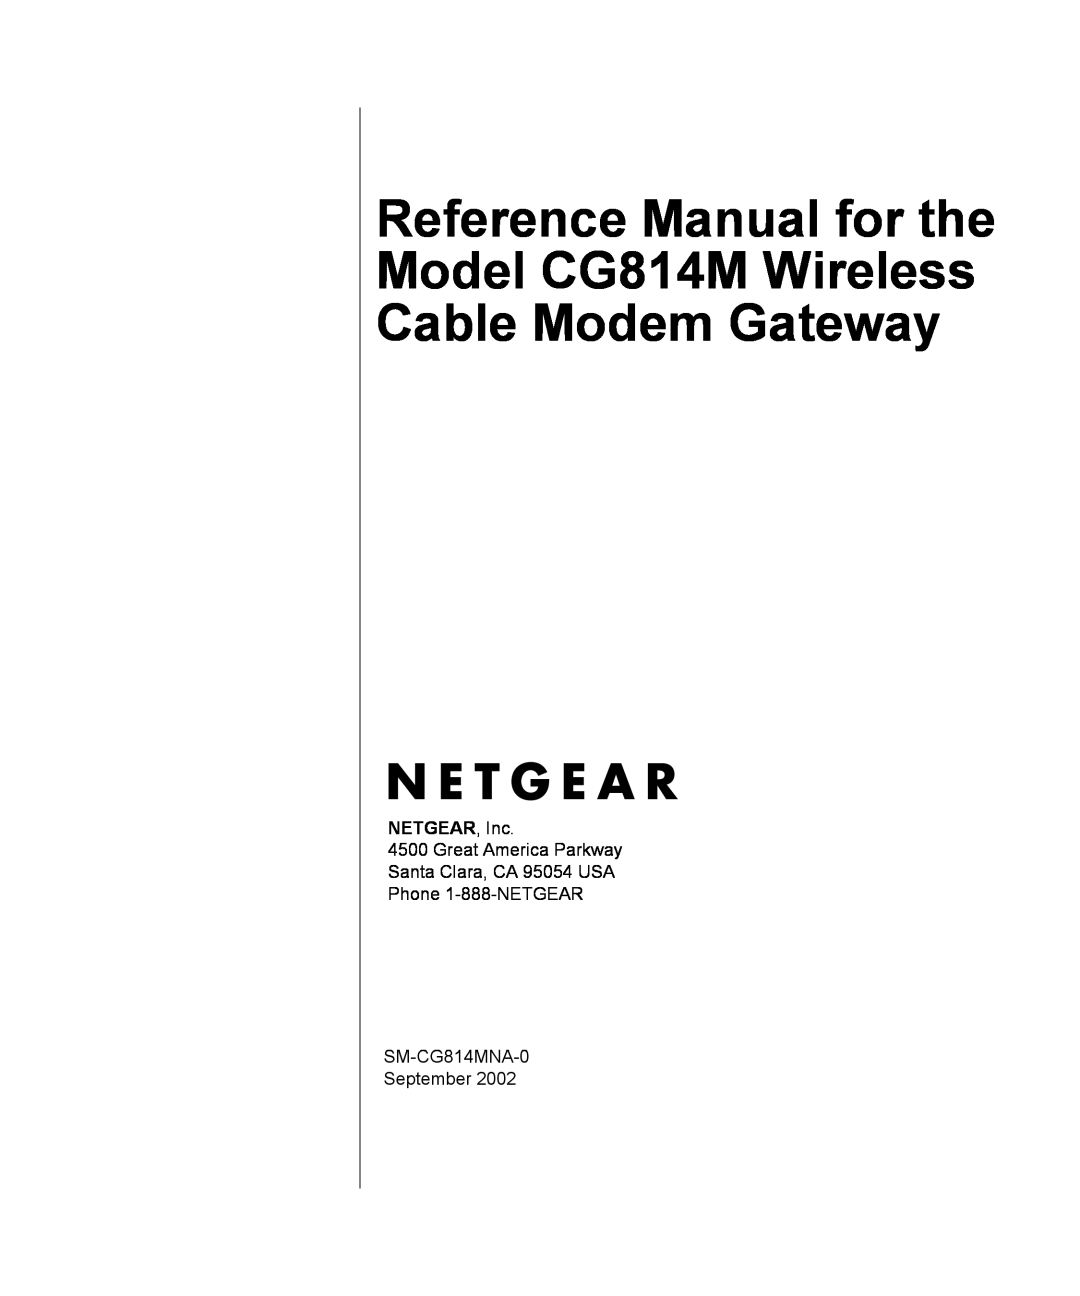 NETGEAR manual Reference Manual for the Model CG814M Wireless Cable Modem Gateway, NETGEAR, Inc 